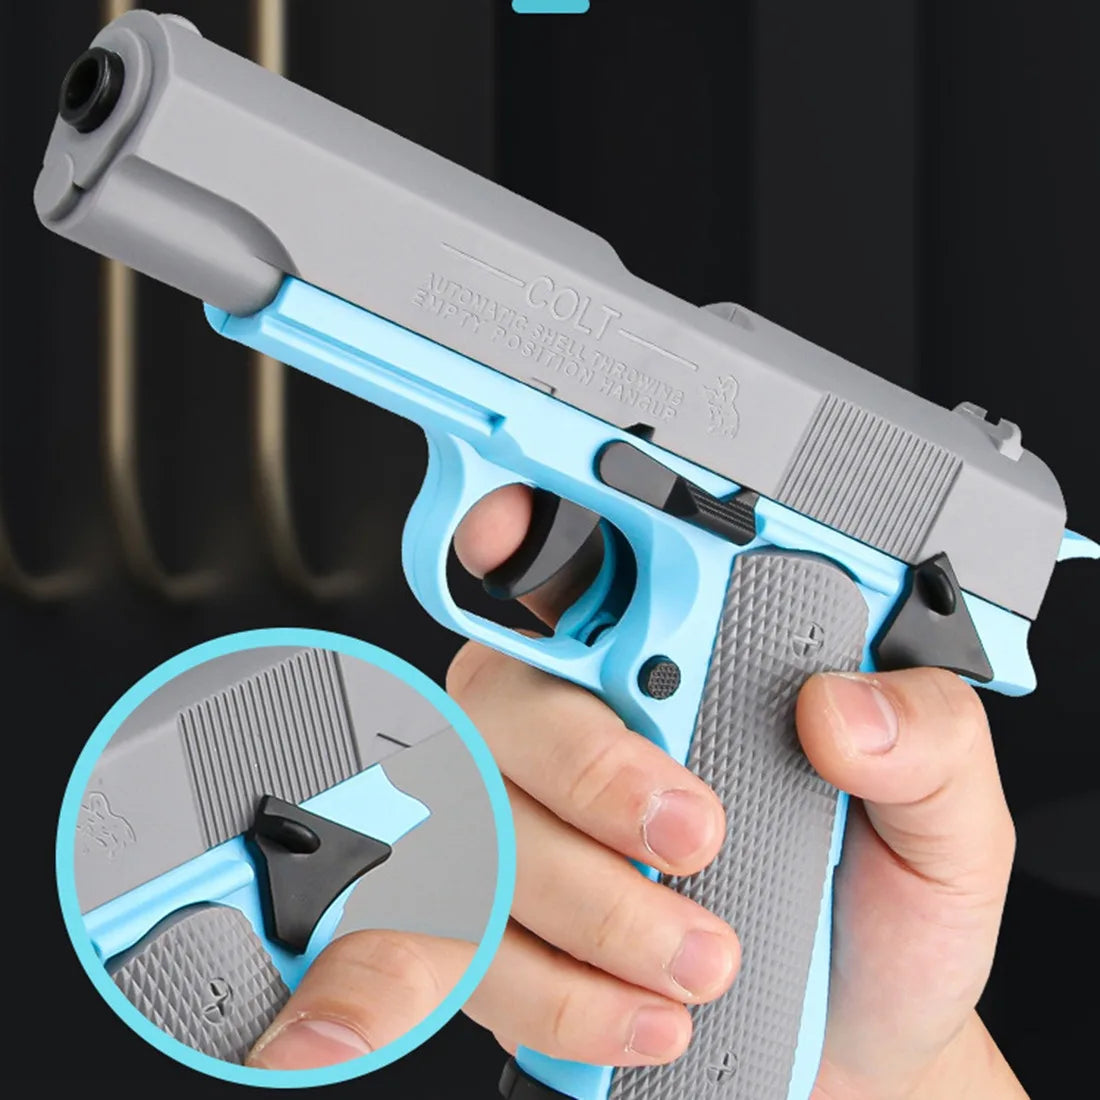 3D Printed Gun Non-Firing Mini Model Gravity Straight Jump Toys Kids Stress Relief Toy Christmas Gift